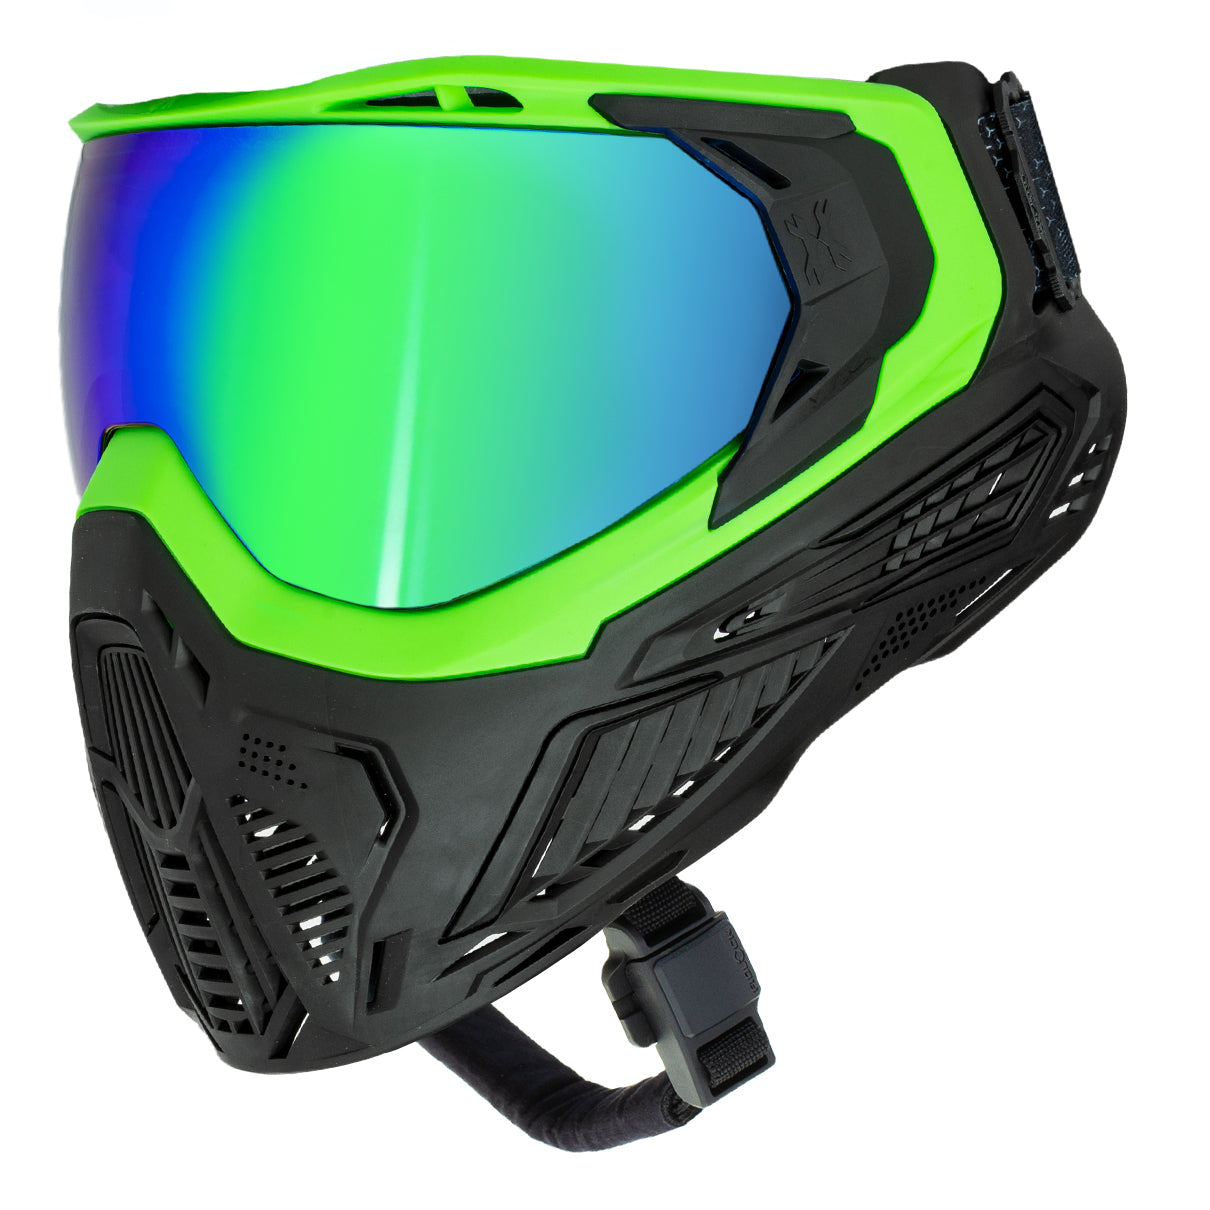 HK Army SLR Paintball Goggle - Journey (Aurora Green Lens)